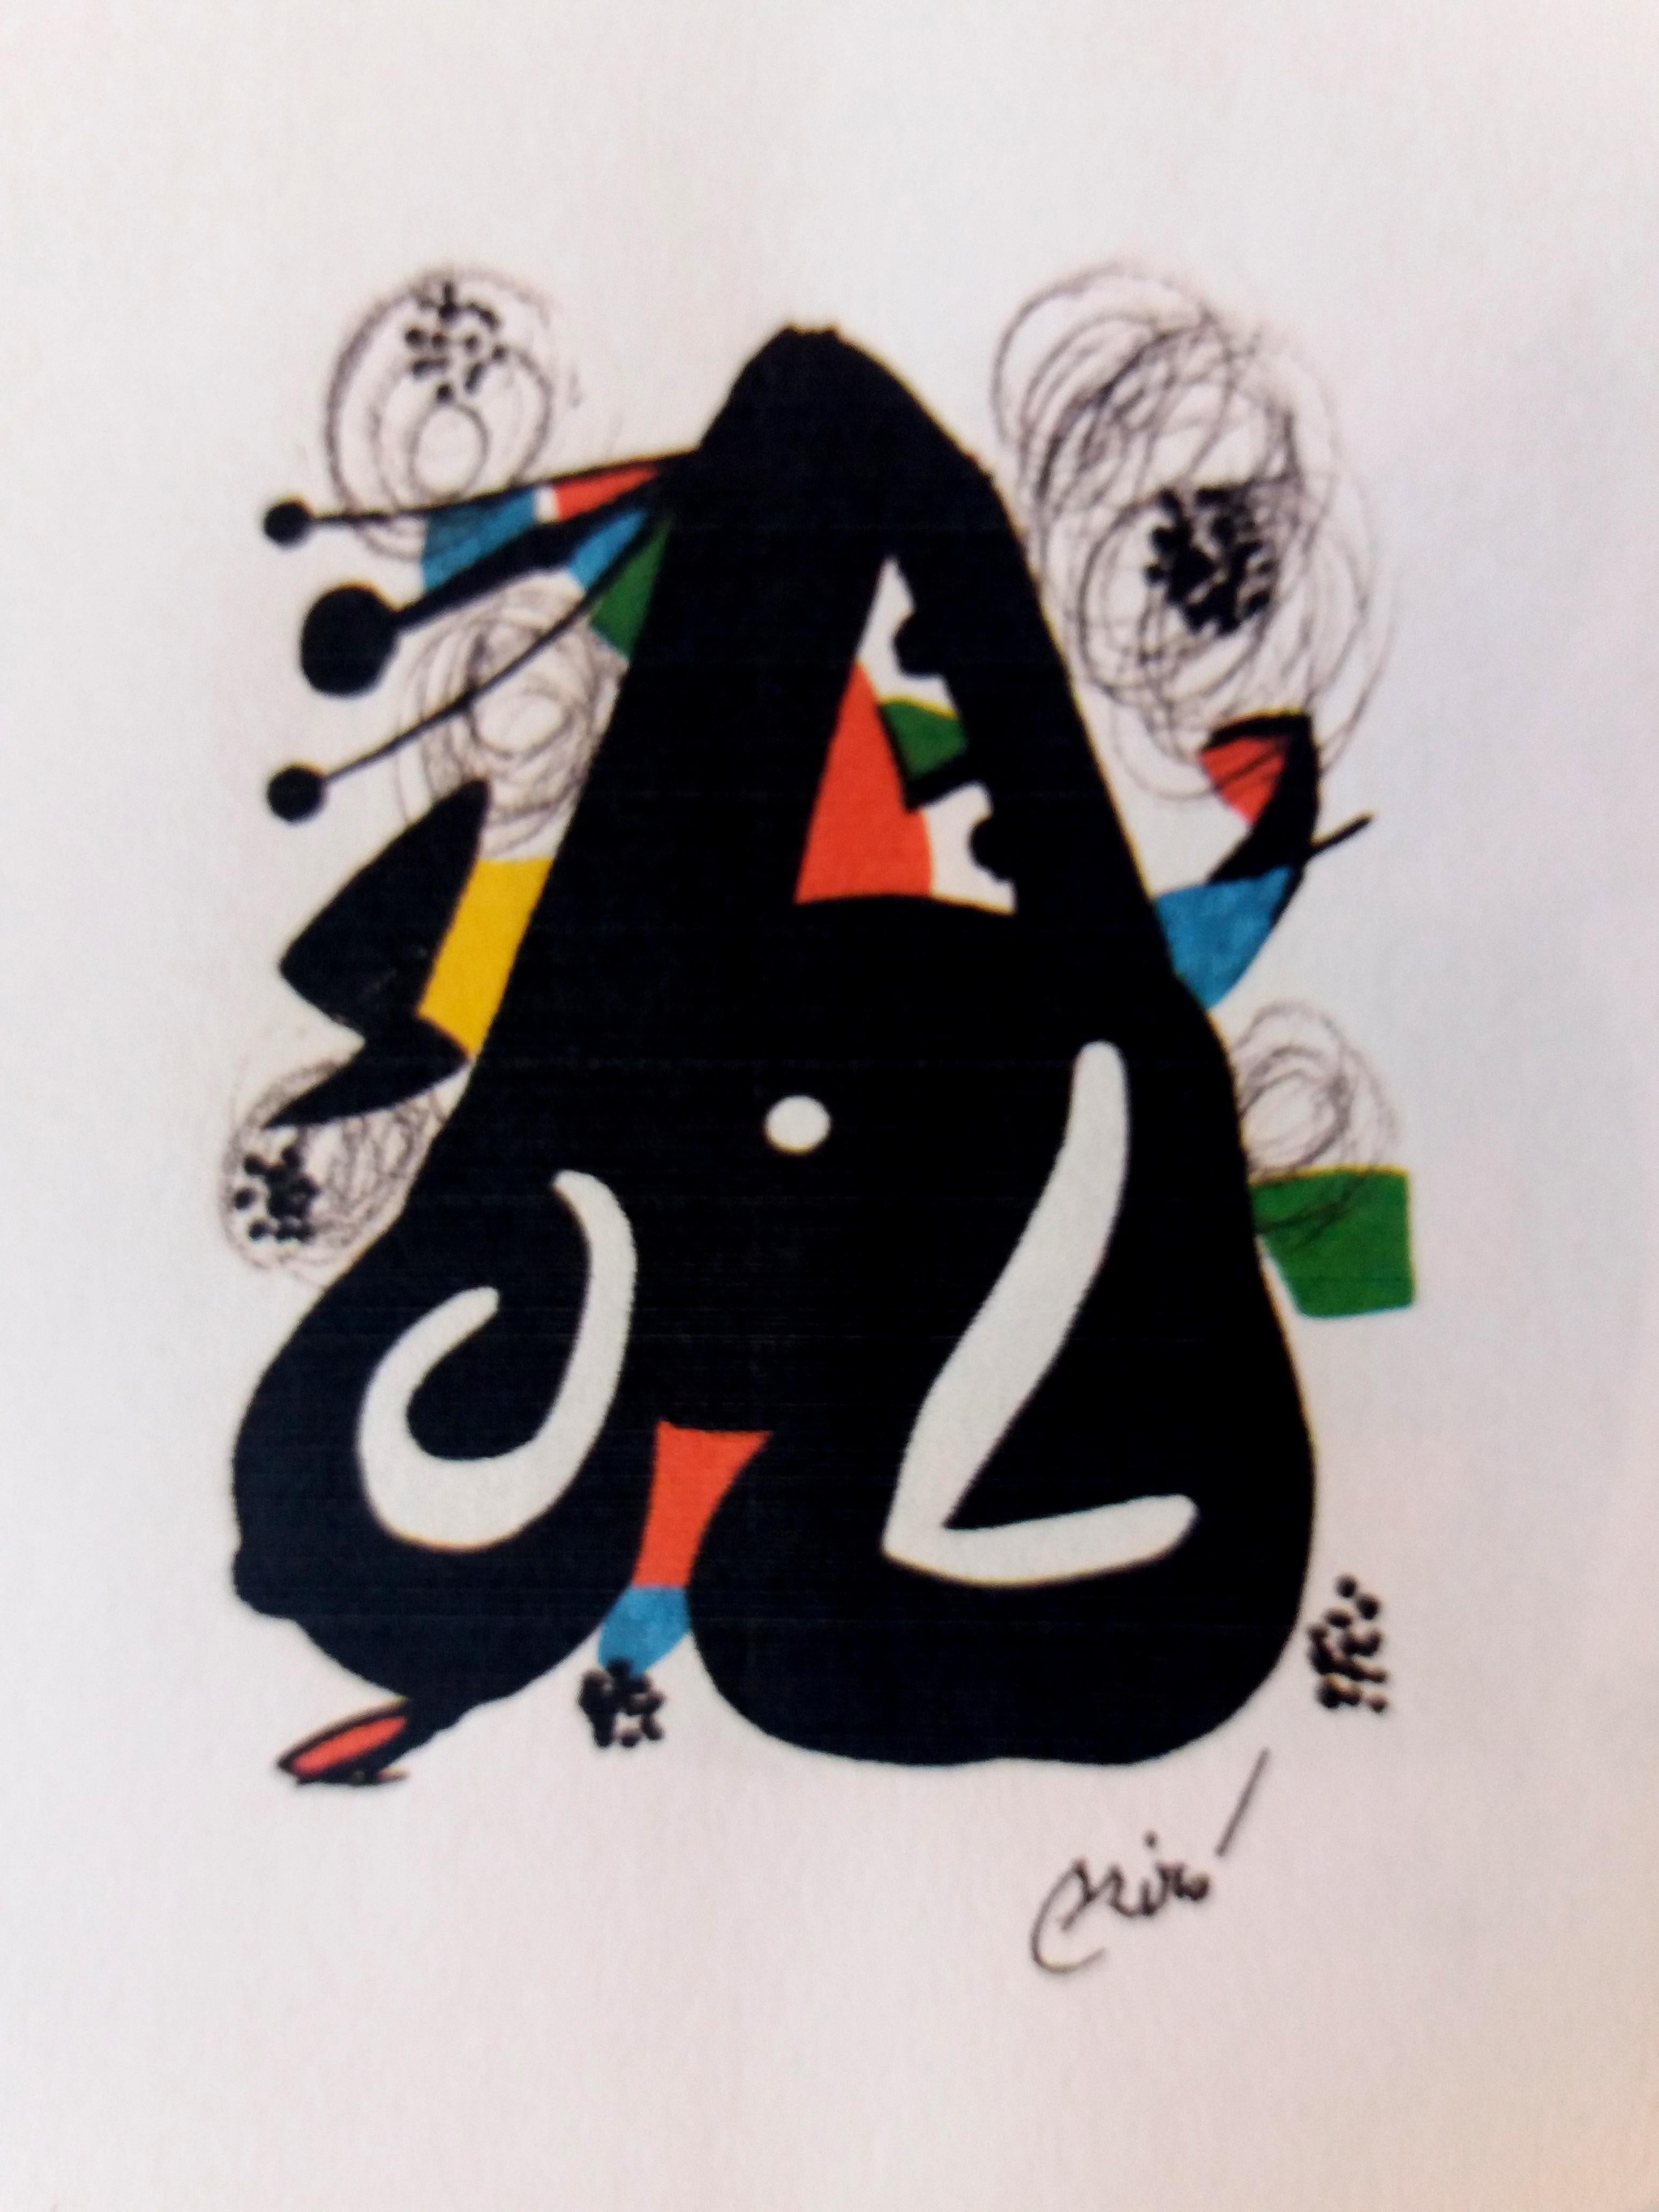 Joan Miró Abstract Print - 8 La Melodie acide original lithograph painting